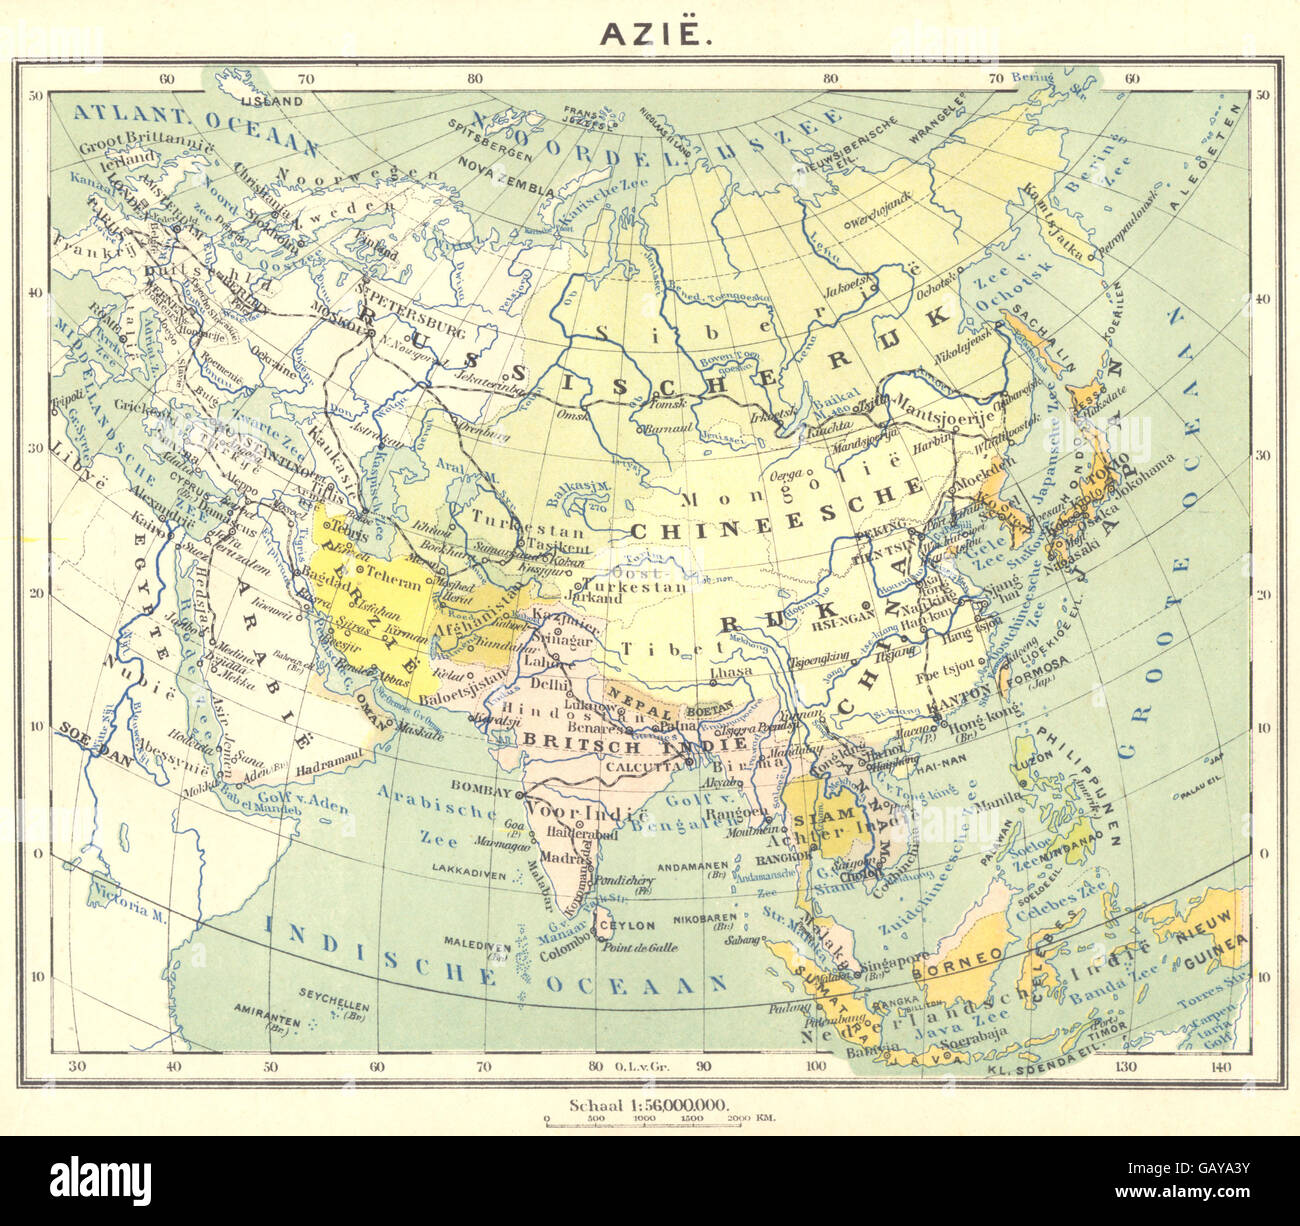 ASIA: Azië (2) , 1922 vintage map Stock Photo